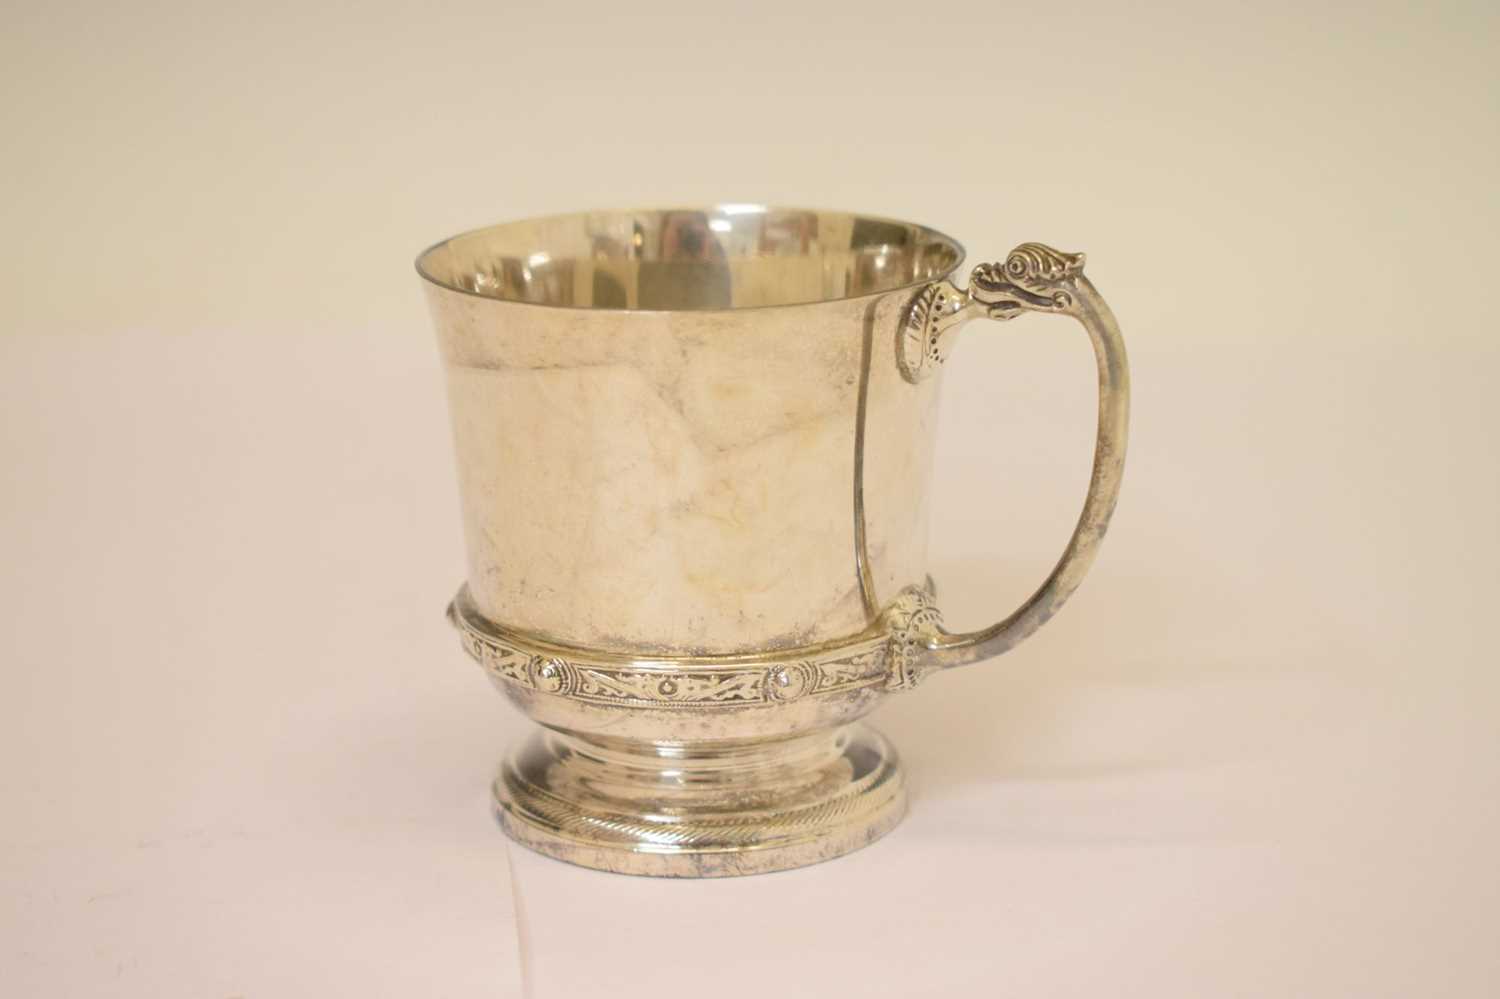 Elizabeth II silver christening mug with Celtic decoration - Image 4 of 7